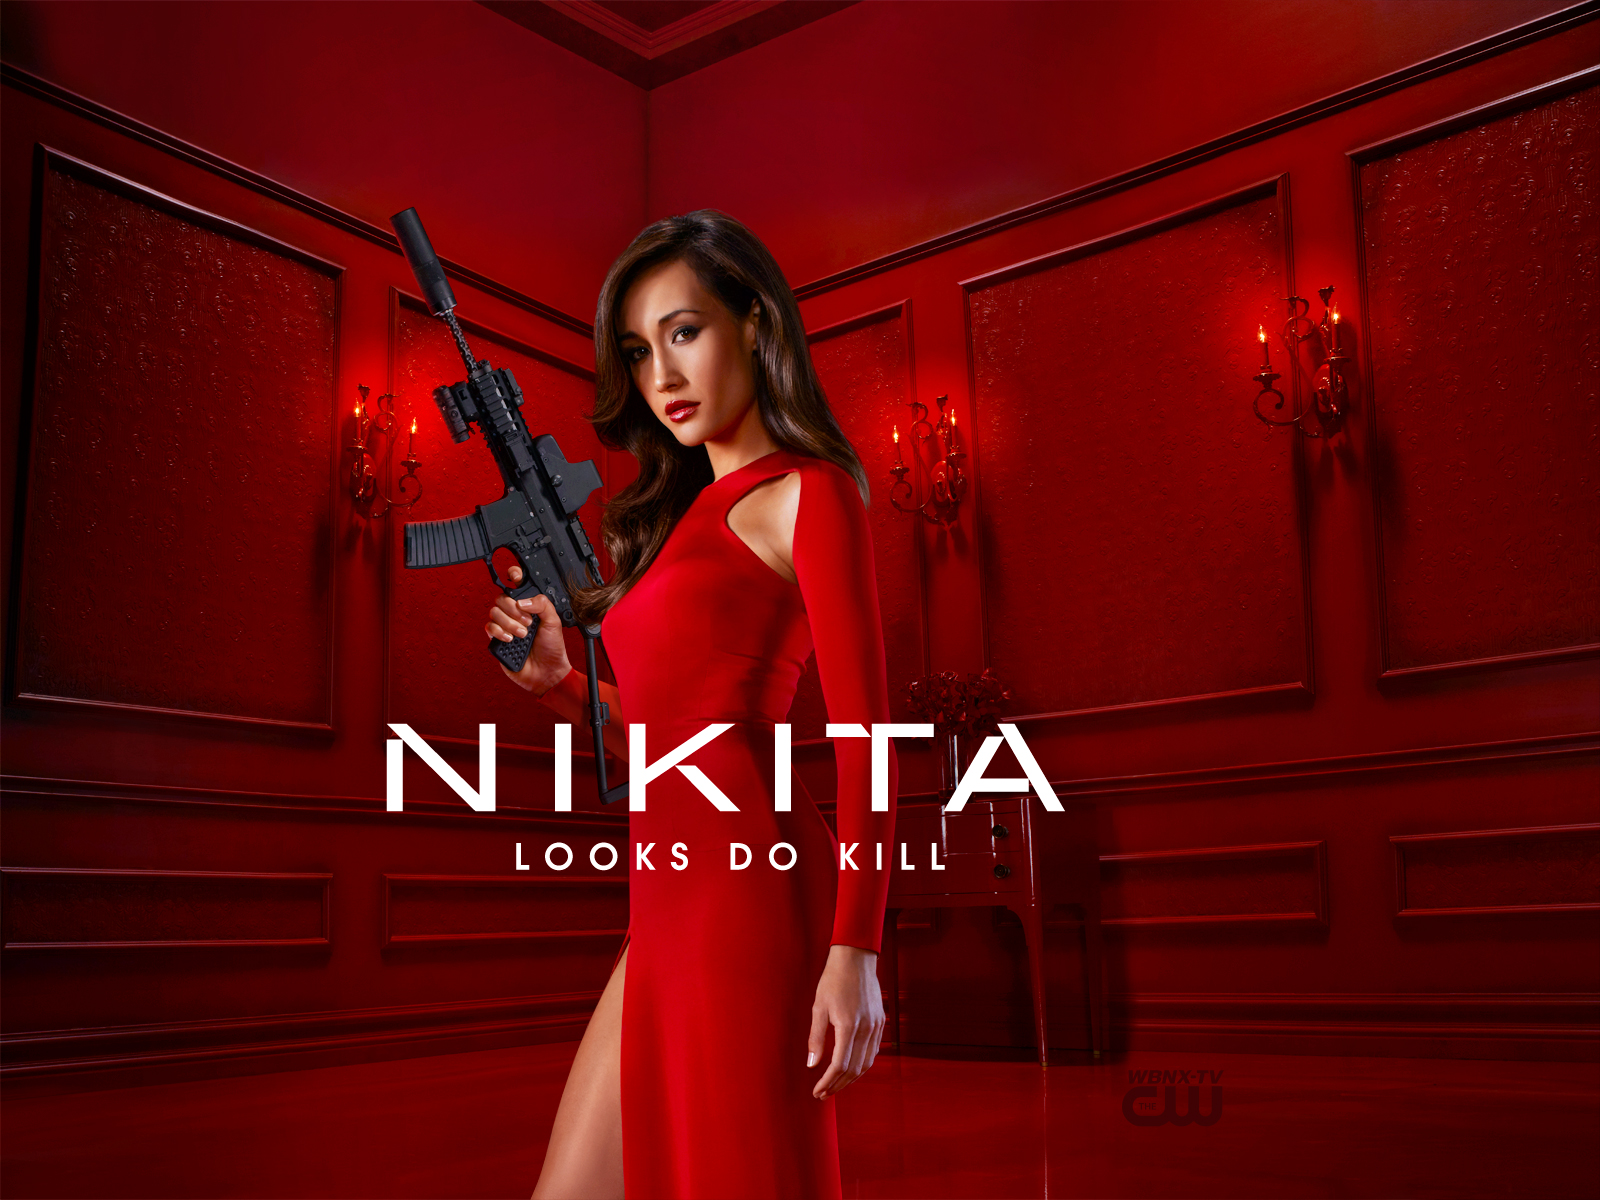 CW TV Series "Nikita"